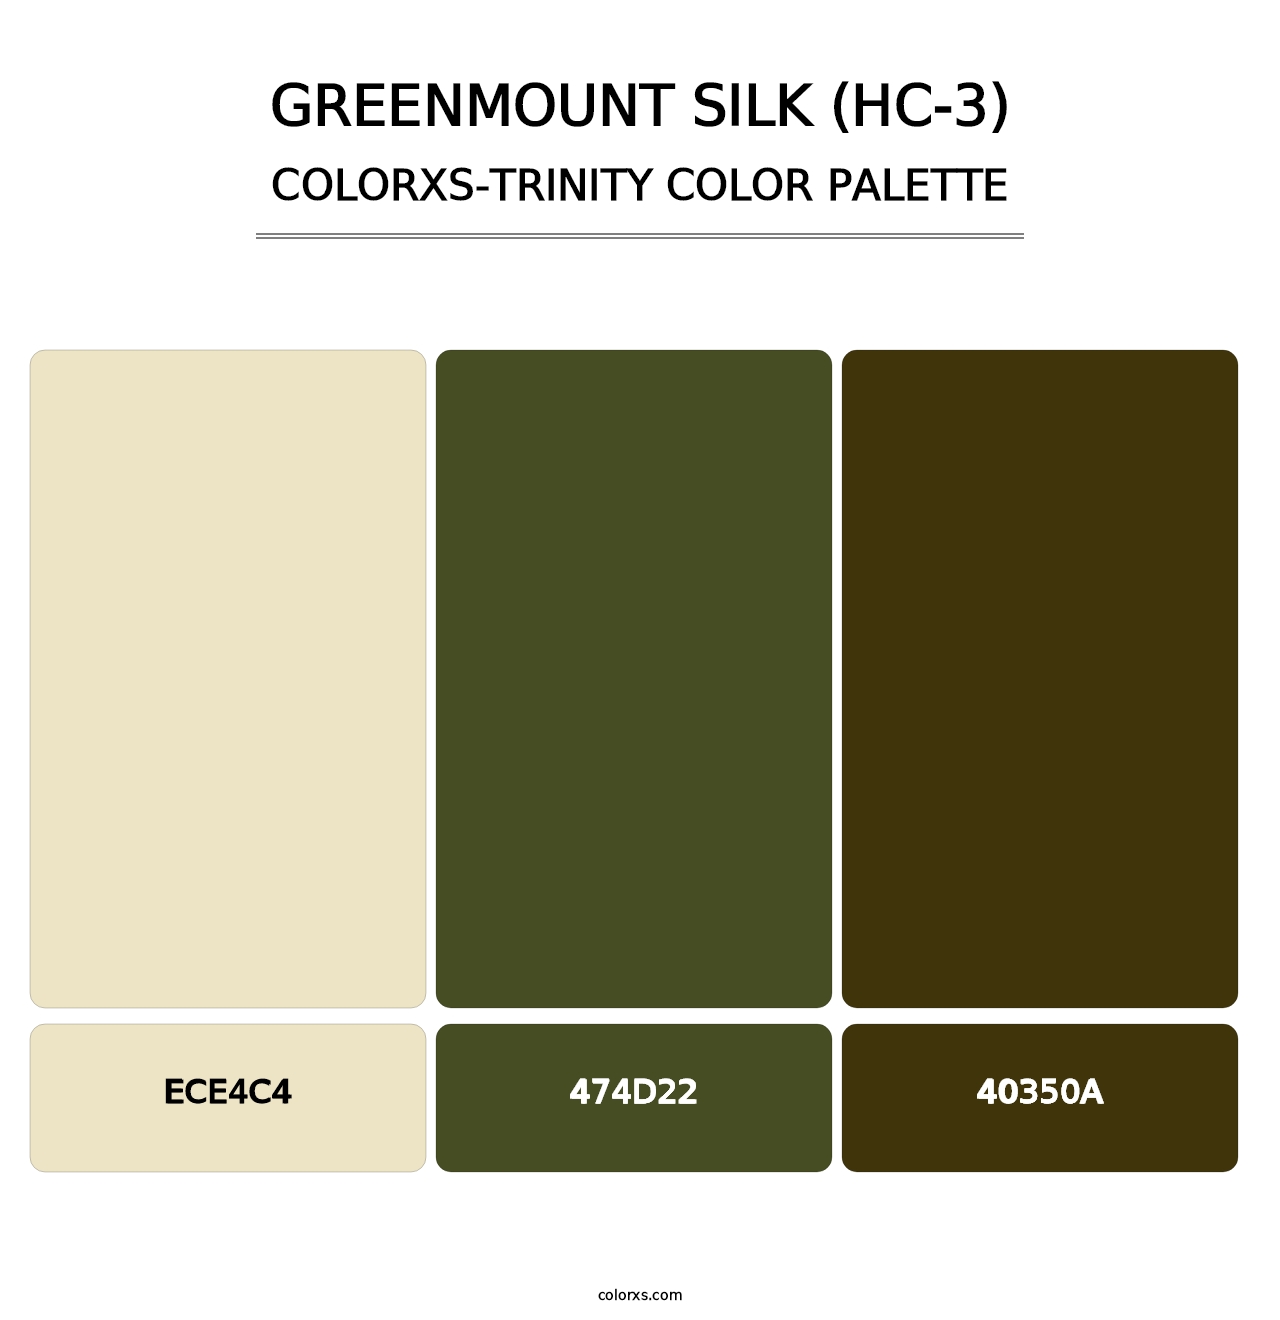 Greenmount Silk (HC-3) - Colorxs Trinity Palette